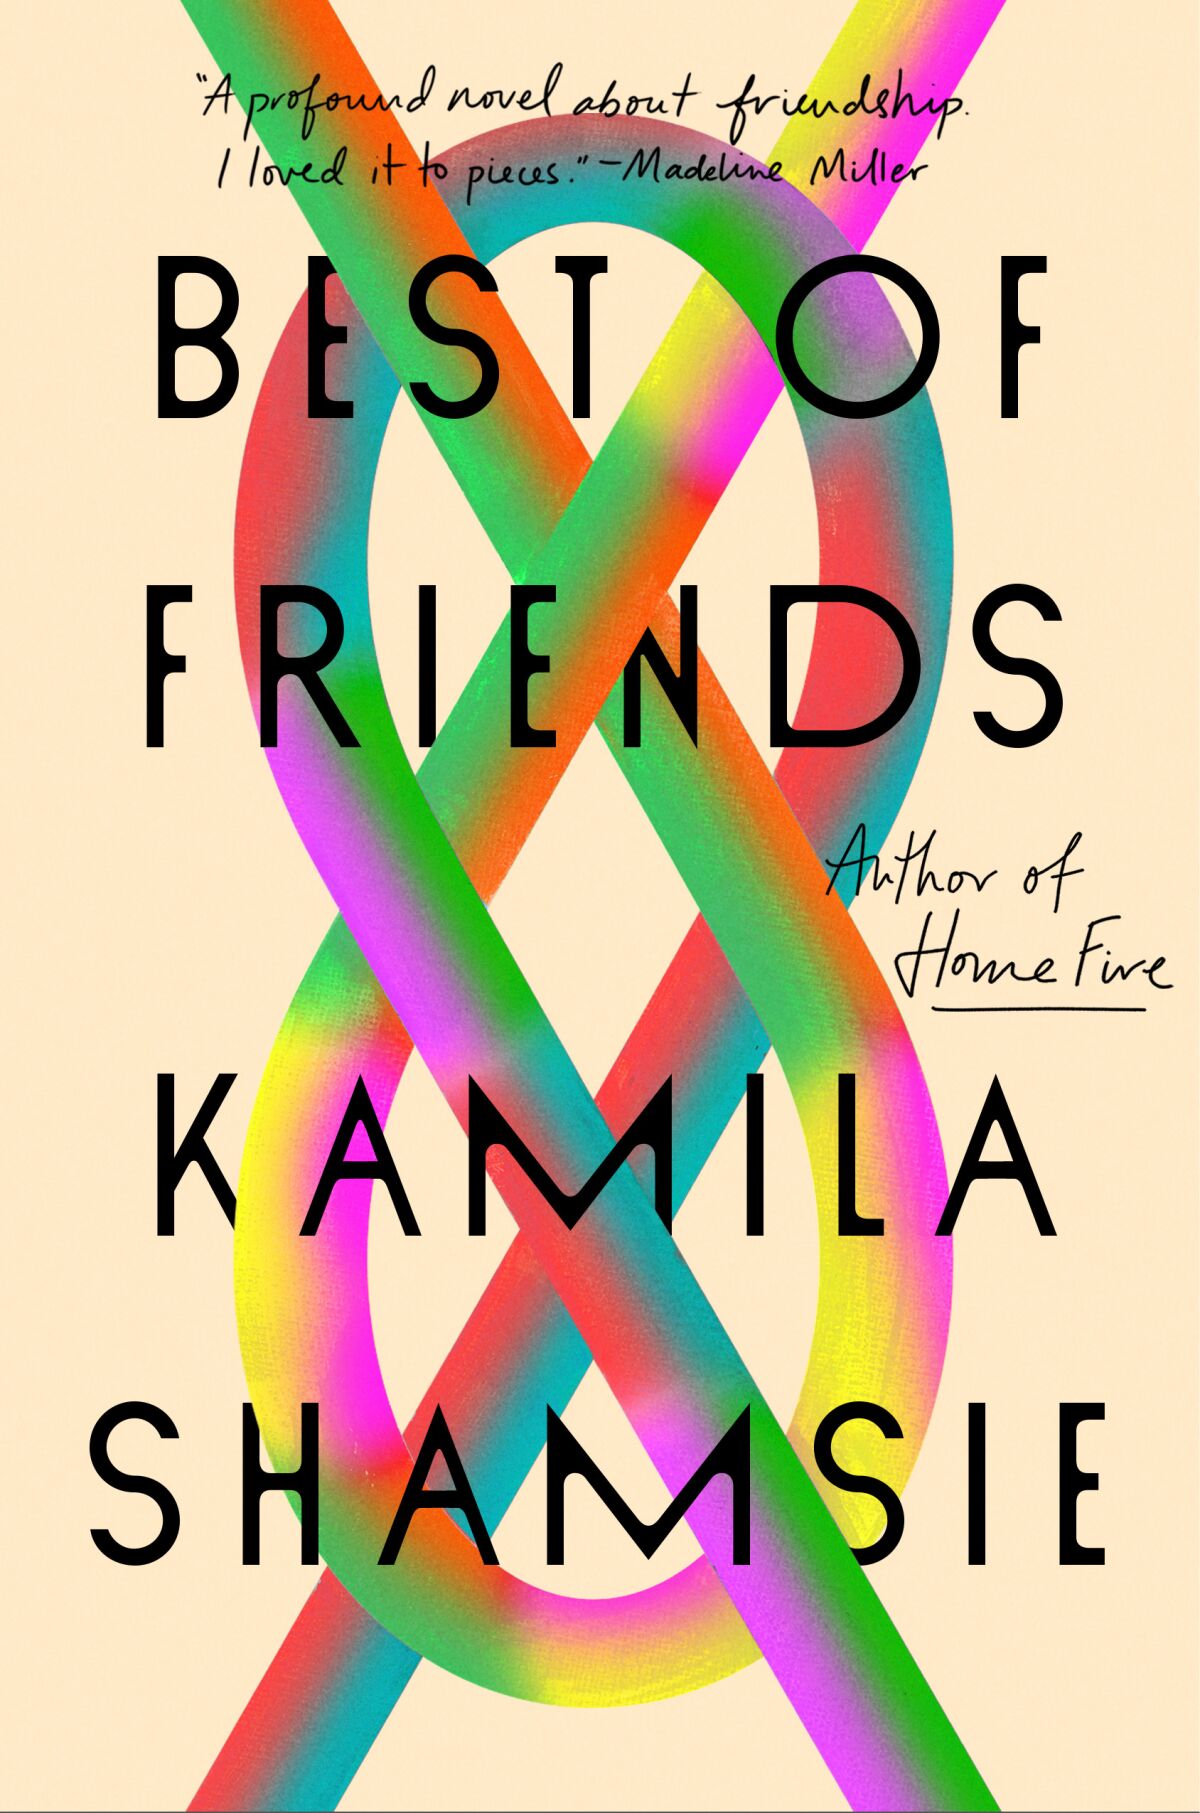 "Best of Friends," by Kamla Shamsie